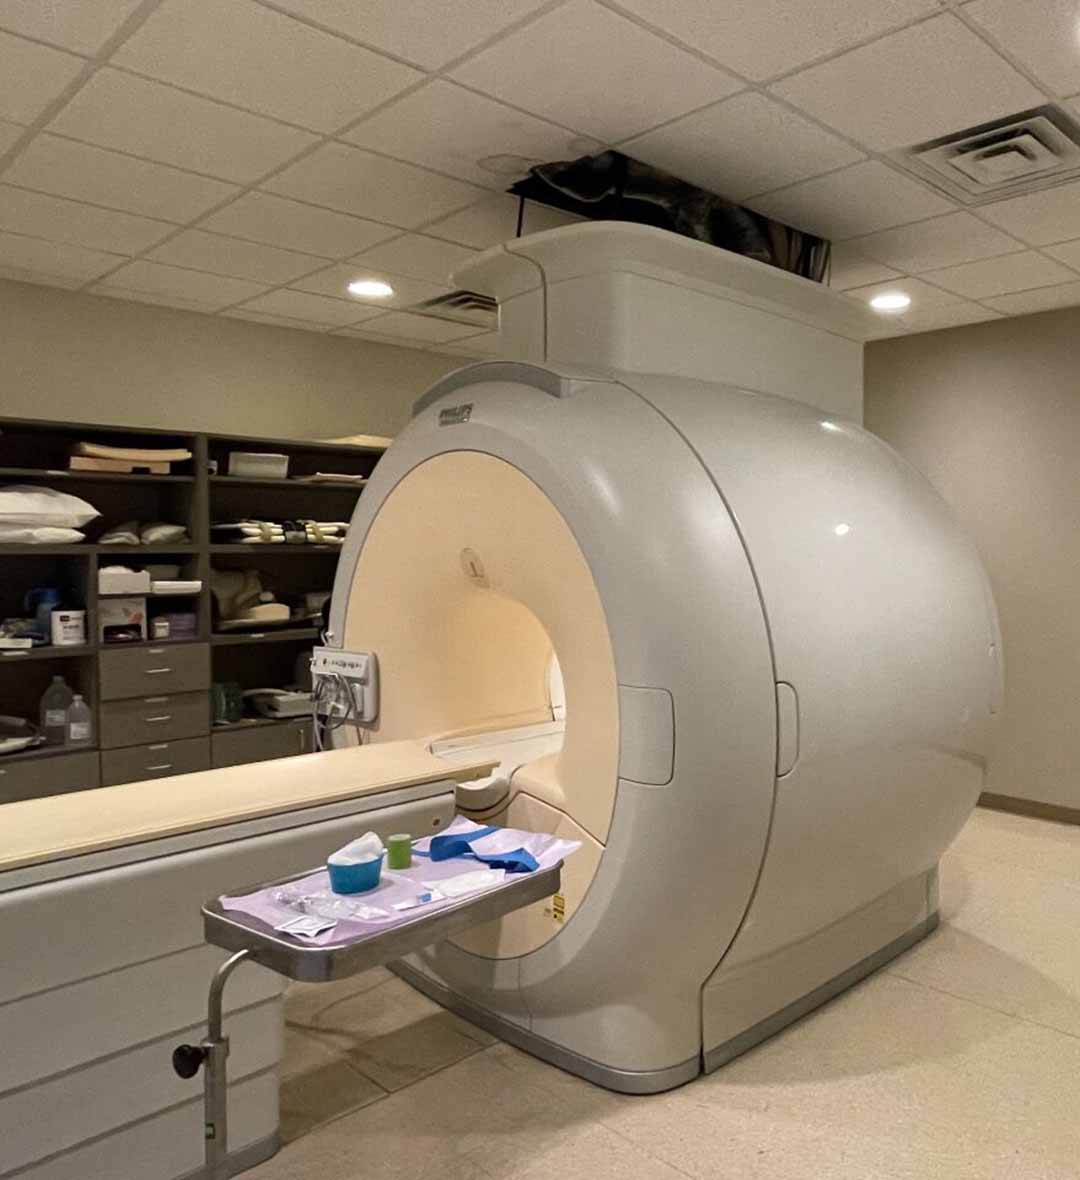 2008 Philips Achieva XR-Series 3.0T MRI System